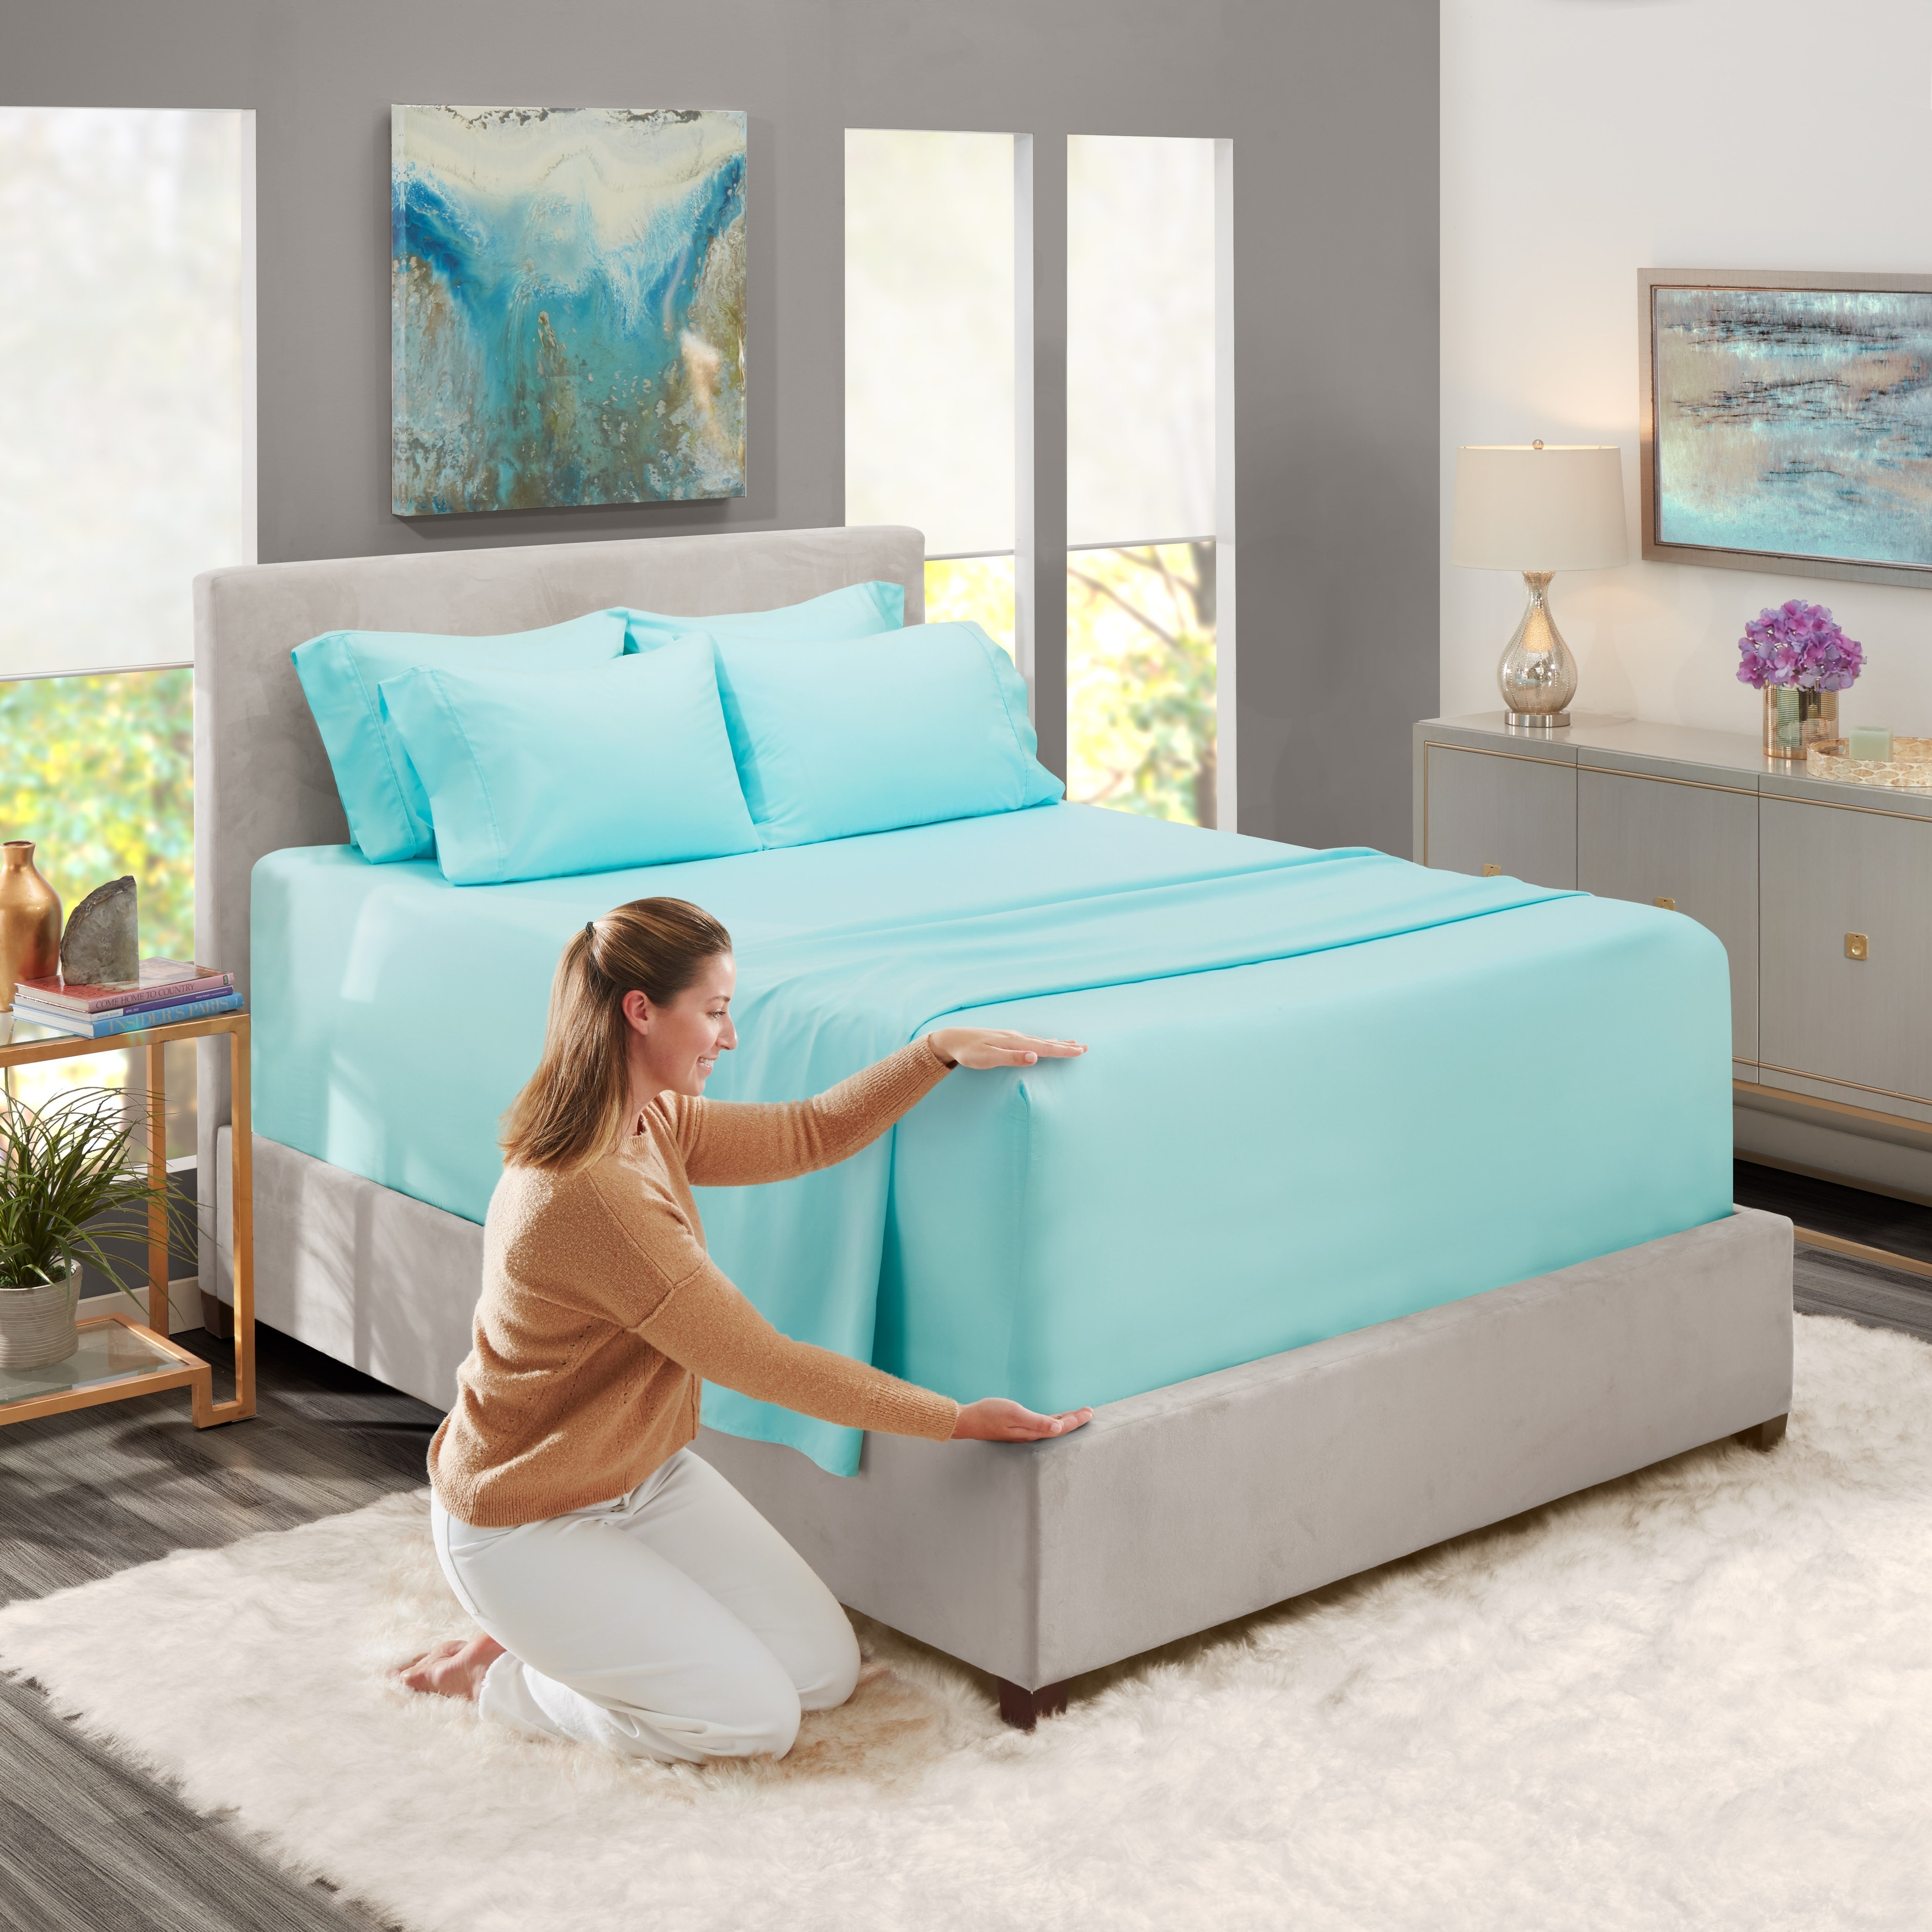 Super Soft Extra Deep Pocket Bed Sheet Set with Oversize Flat - On